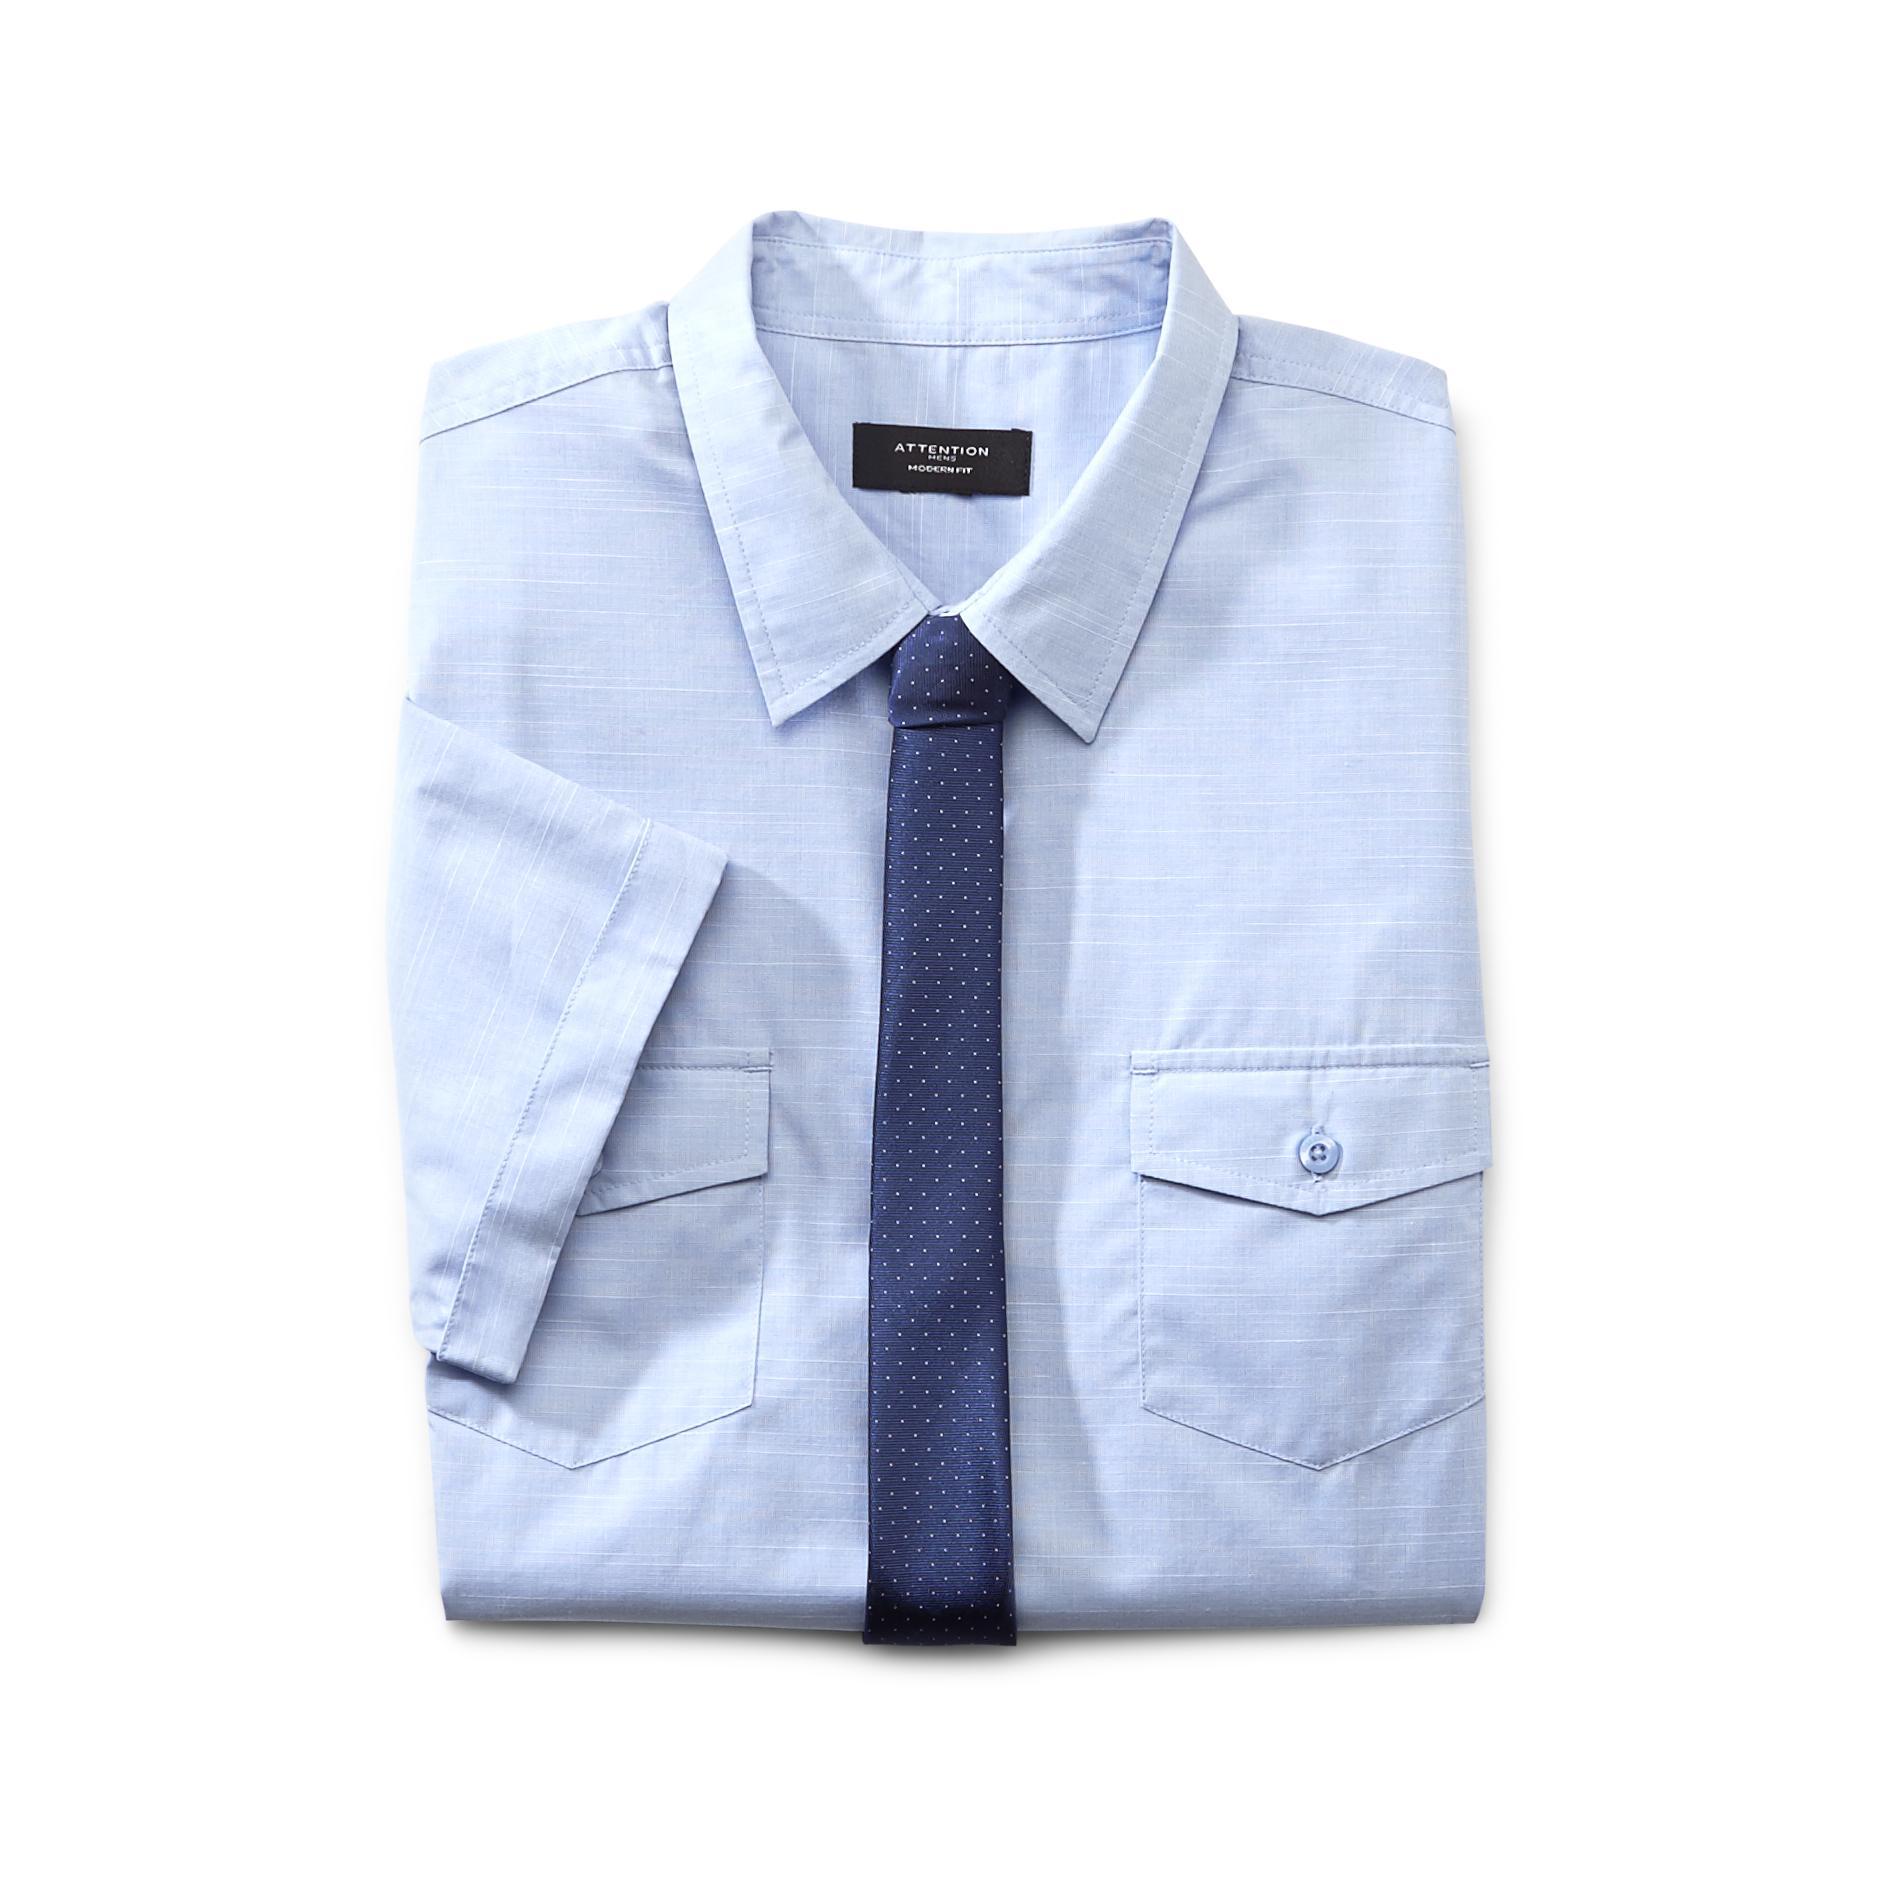 Attention Men's Short-Sleeve Dress Shirt & Tie